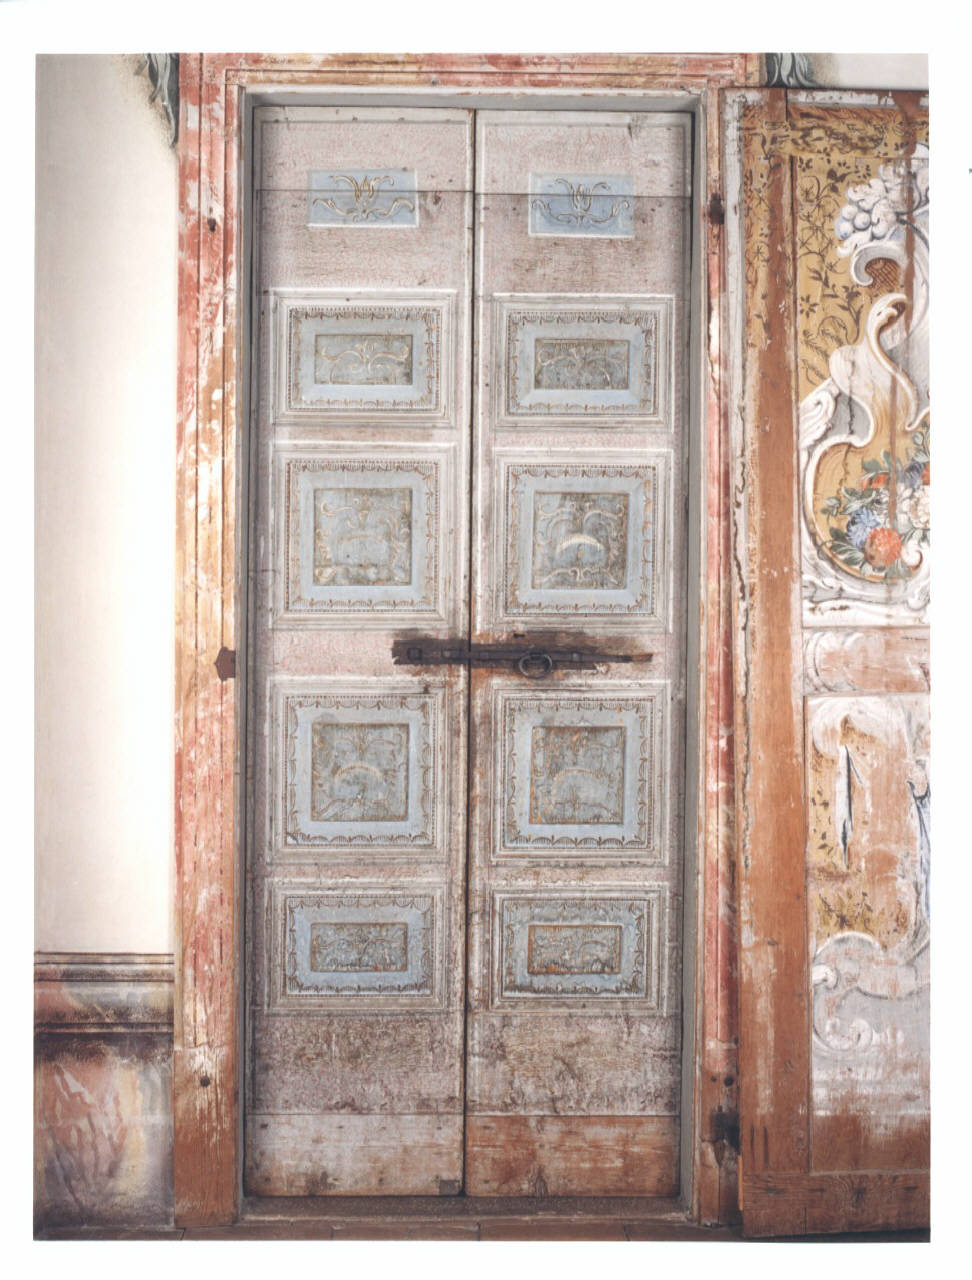 motivi decorativi geometrici (porta dipinta) - manifattura lombarda (seconda metà sec. XVIII)